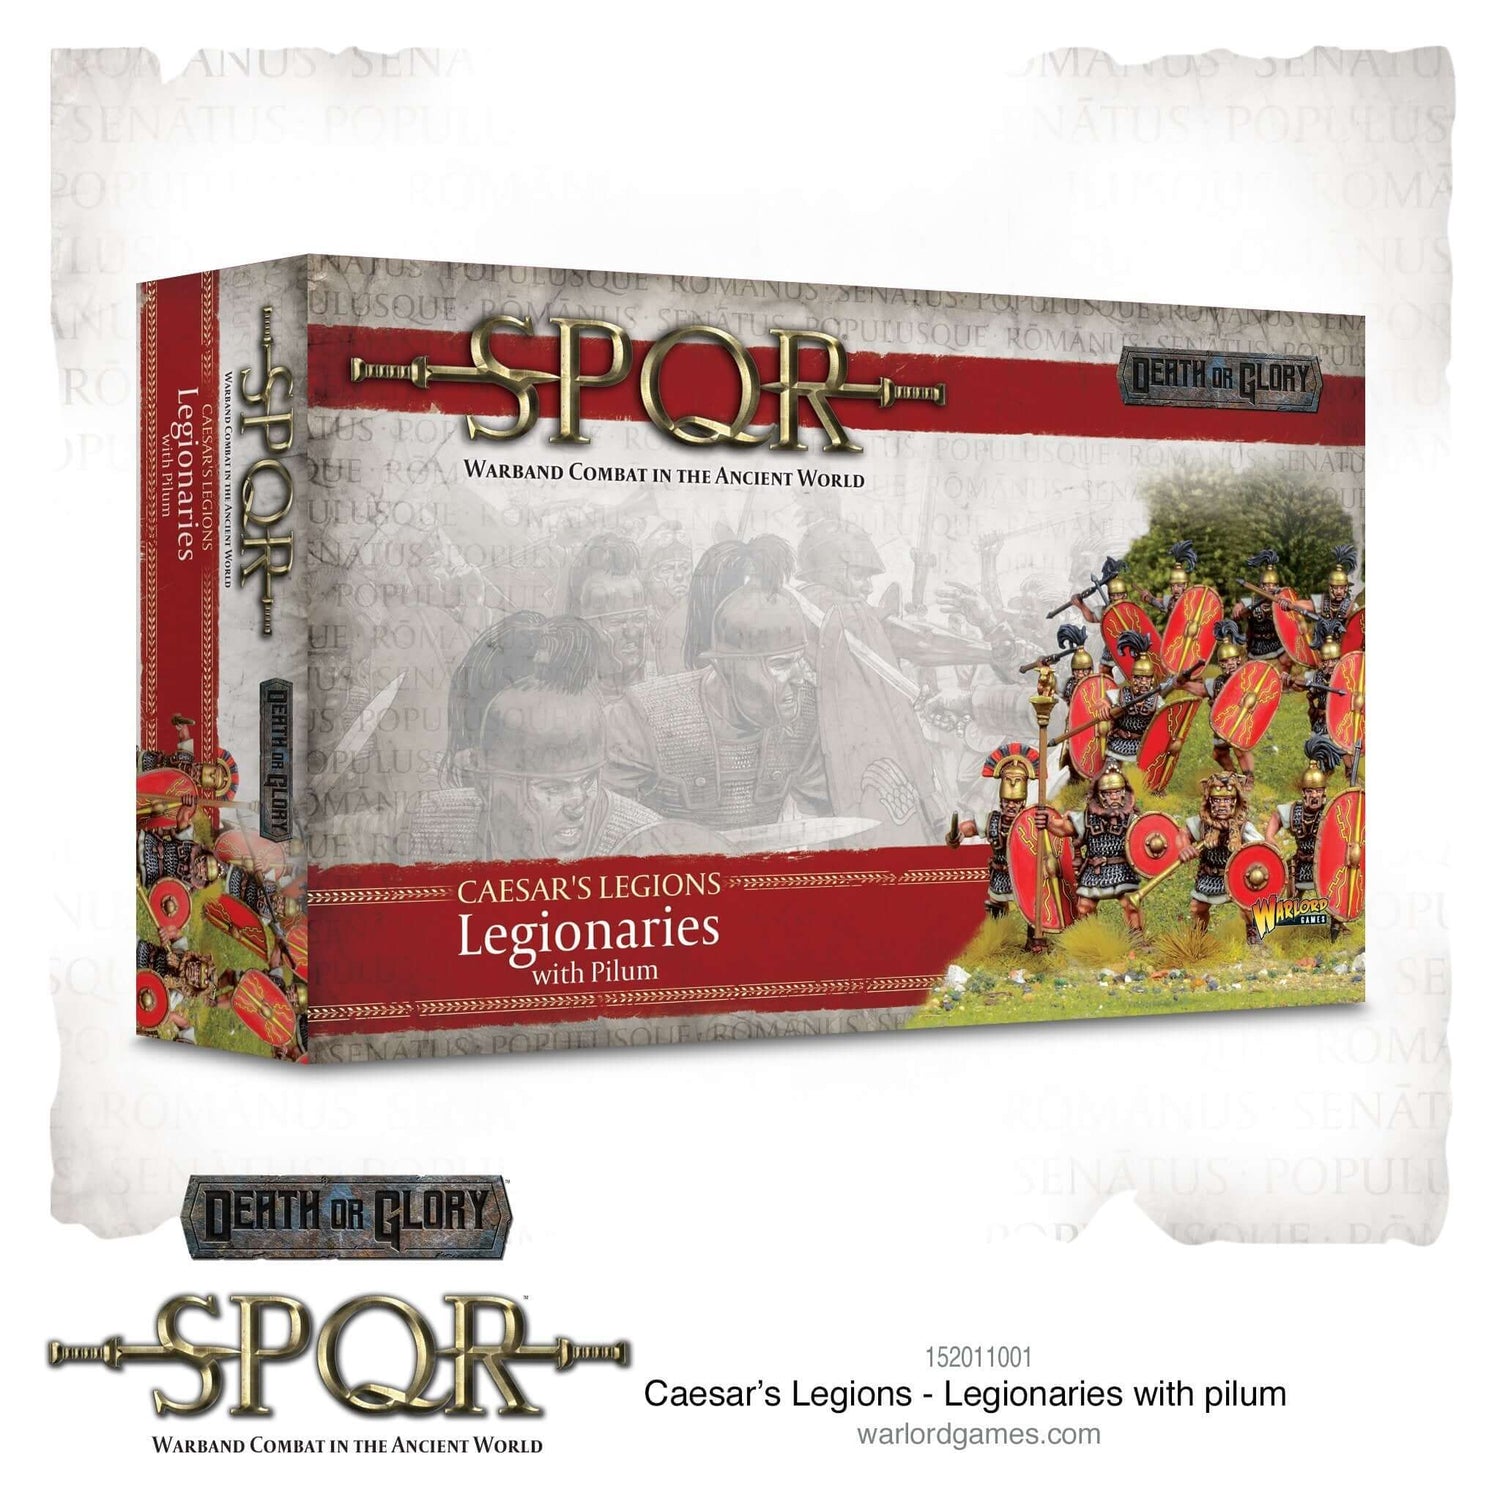 SPQR: Caesar's Legions - Legionaries with pilum by Warlord